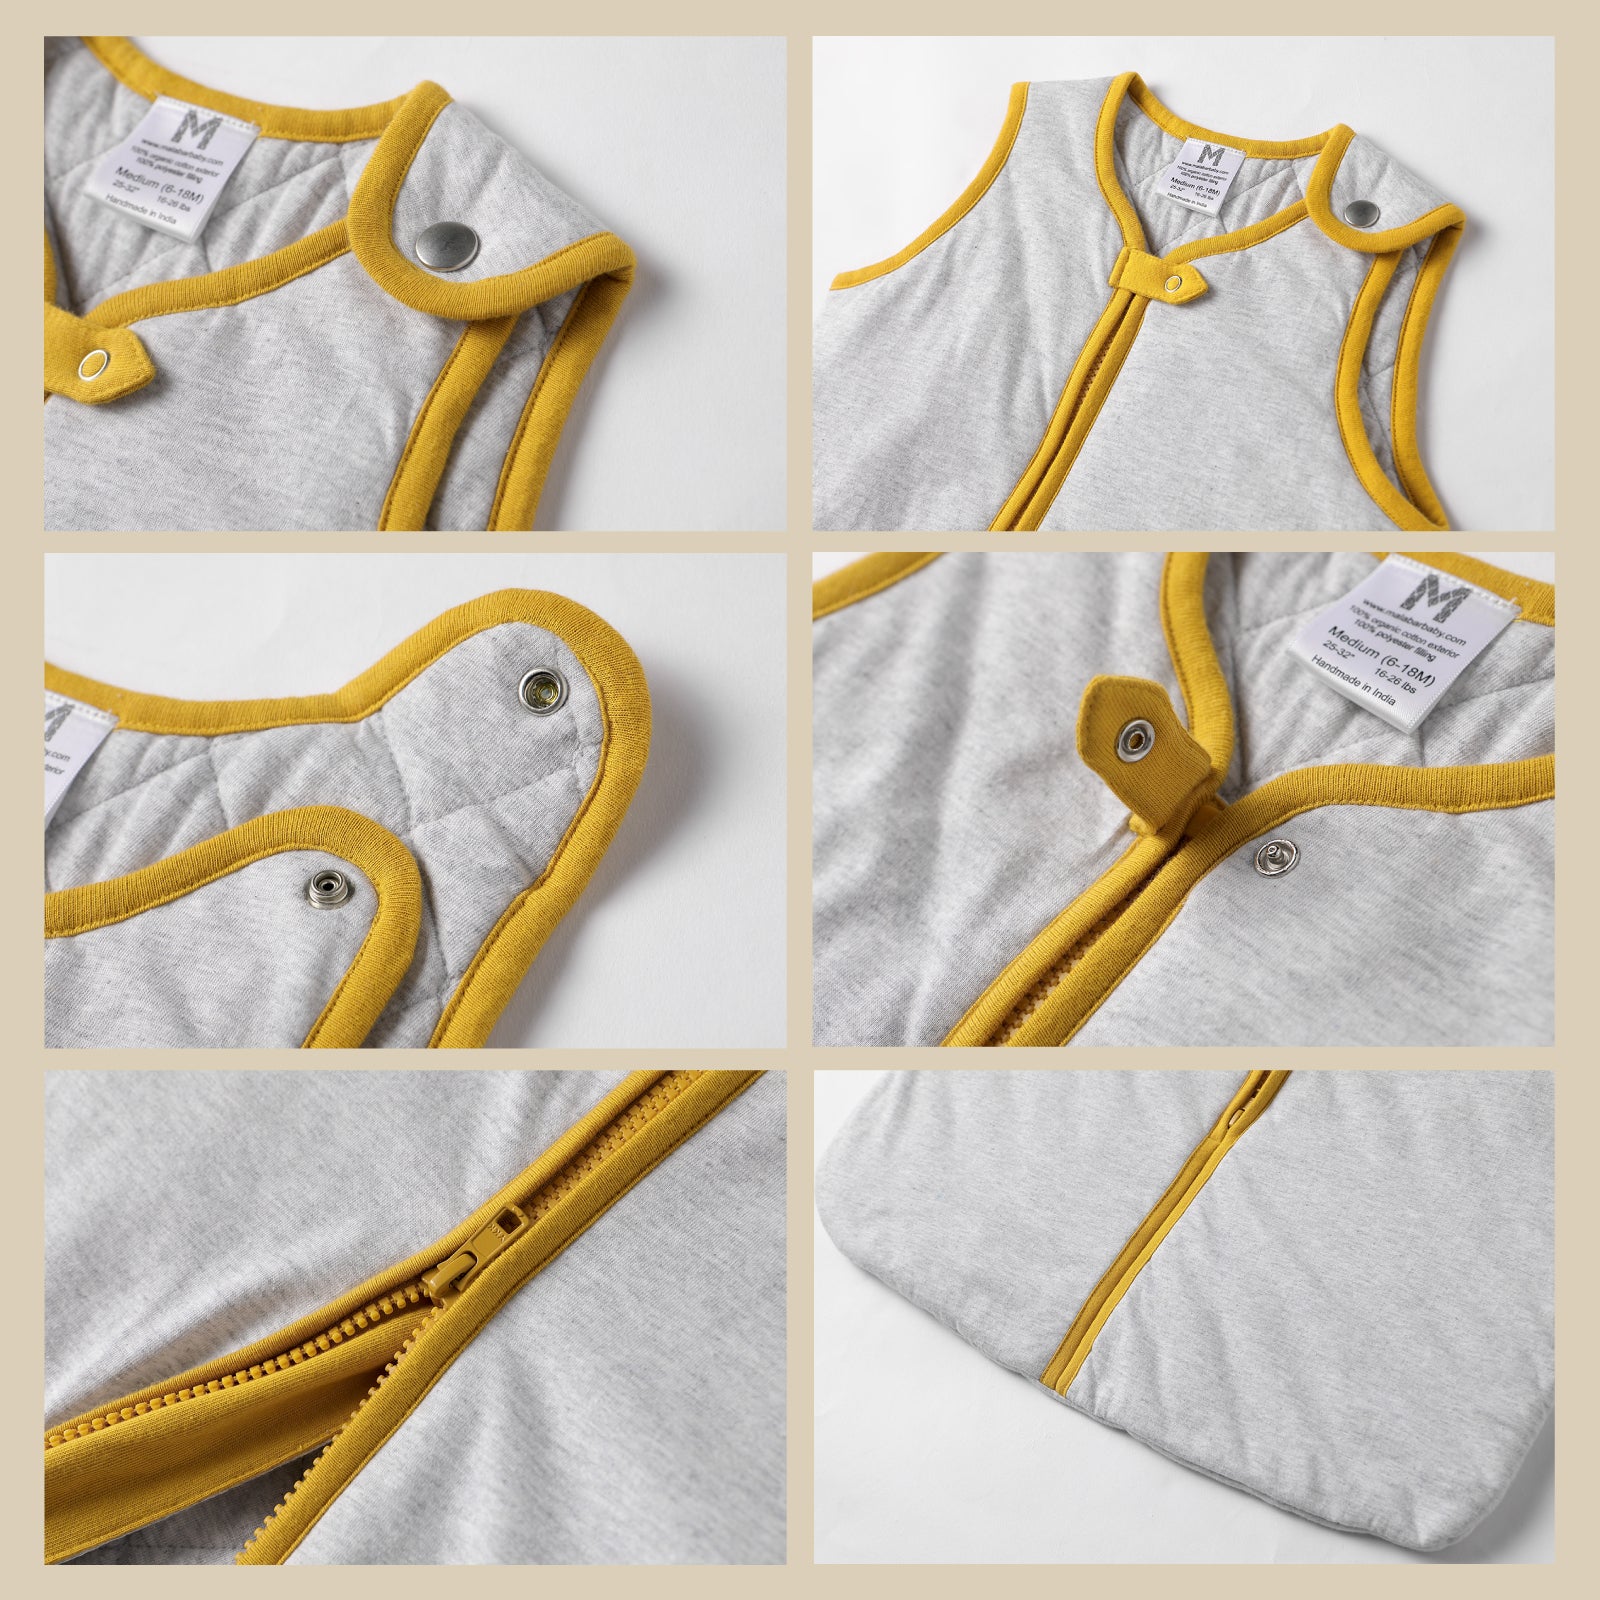 TOG 2.2 (Quilted) - Erawan Grey Wearable Baby Sleep Bag